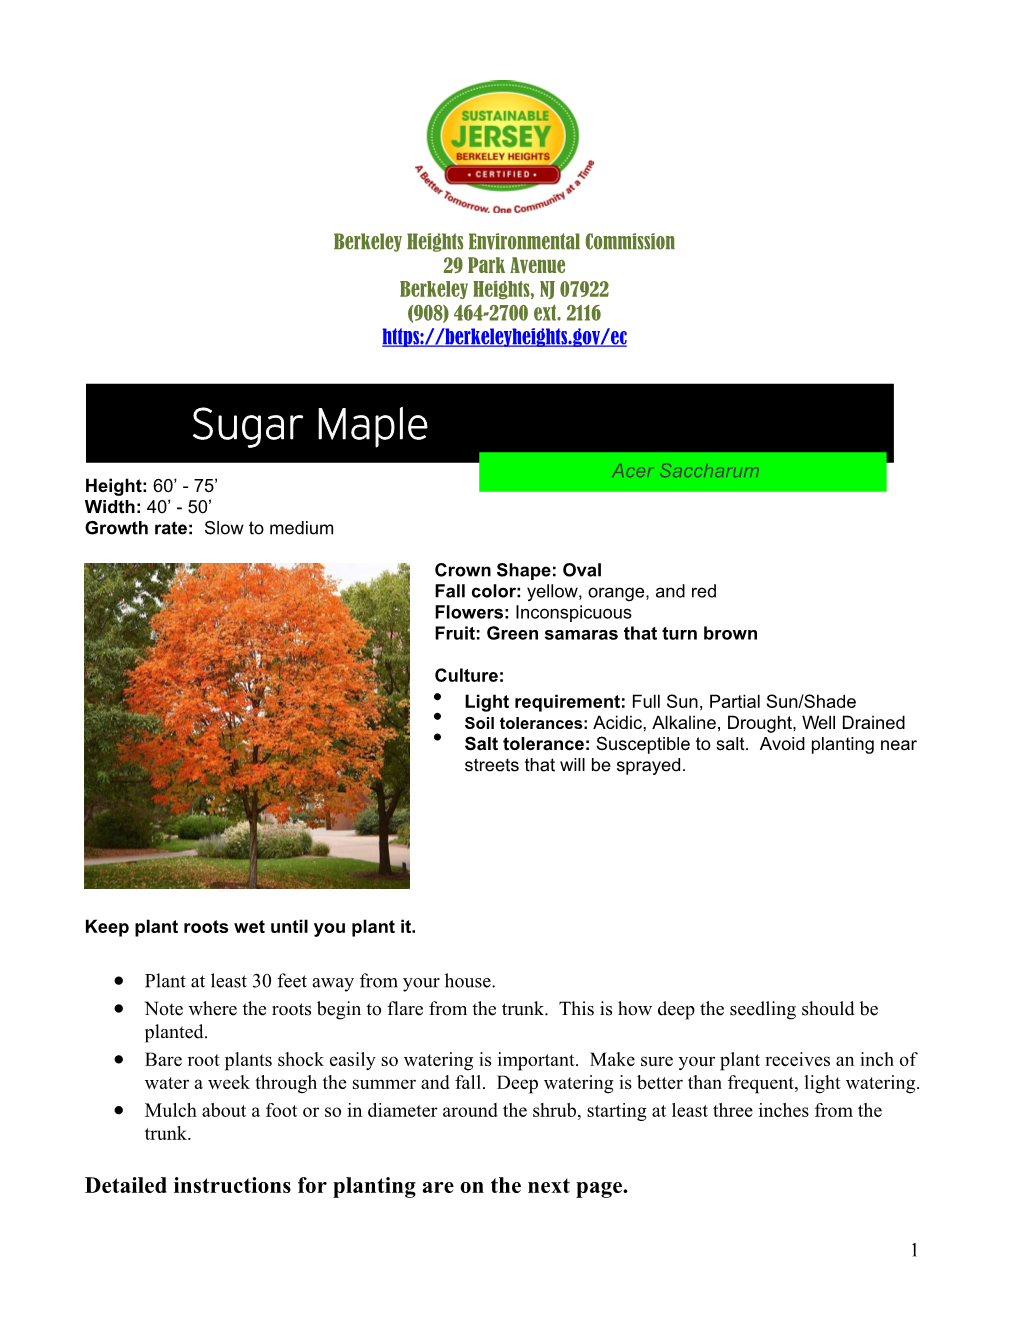 Sugar Maple (Acer Saccharum)